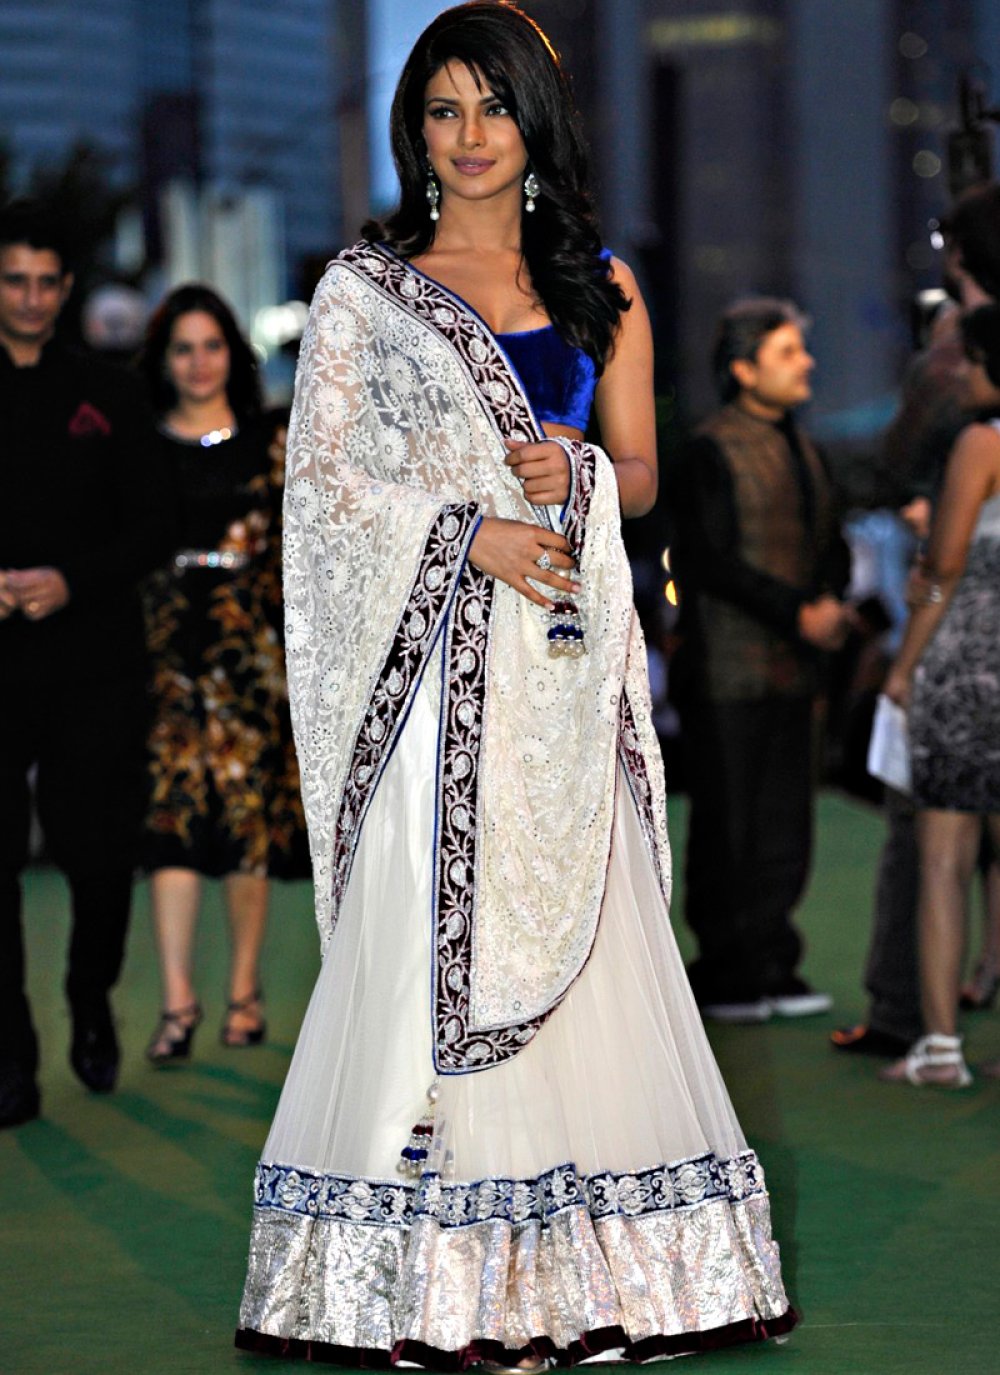 Priyanka Chopra Super Hot in Lehenga Choli - www.Bollyfame… | Flickr